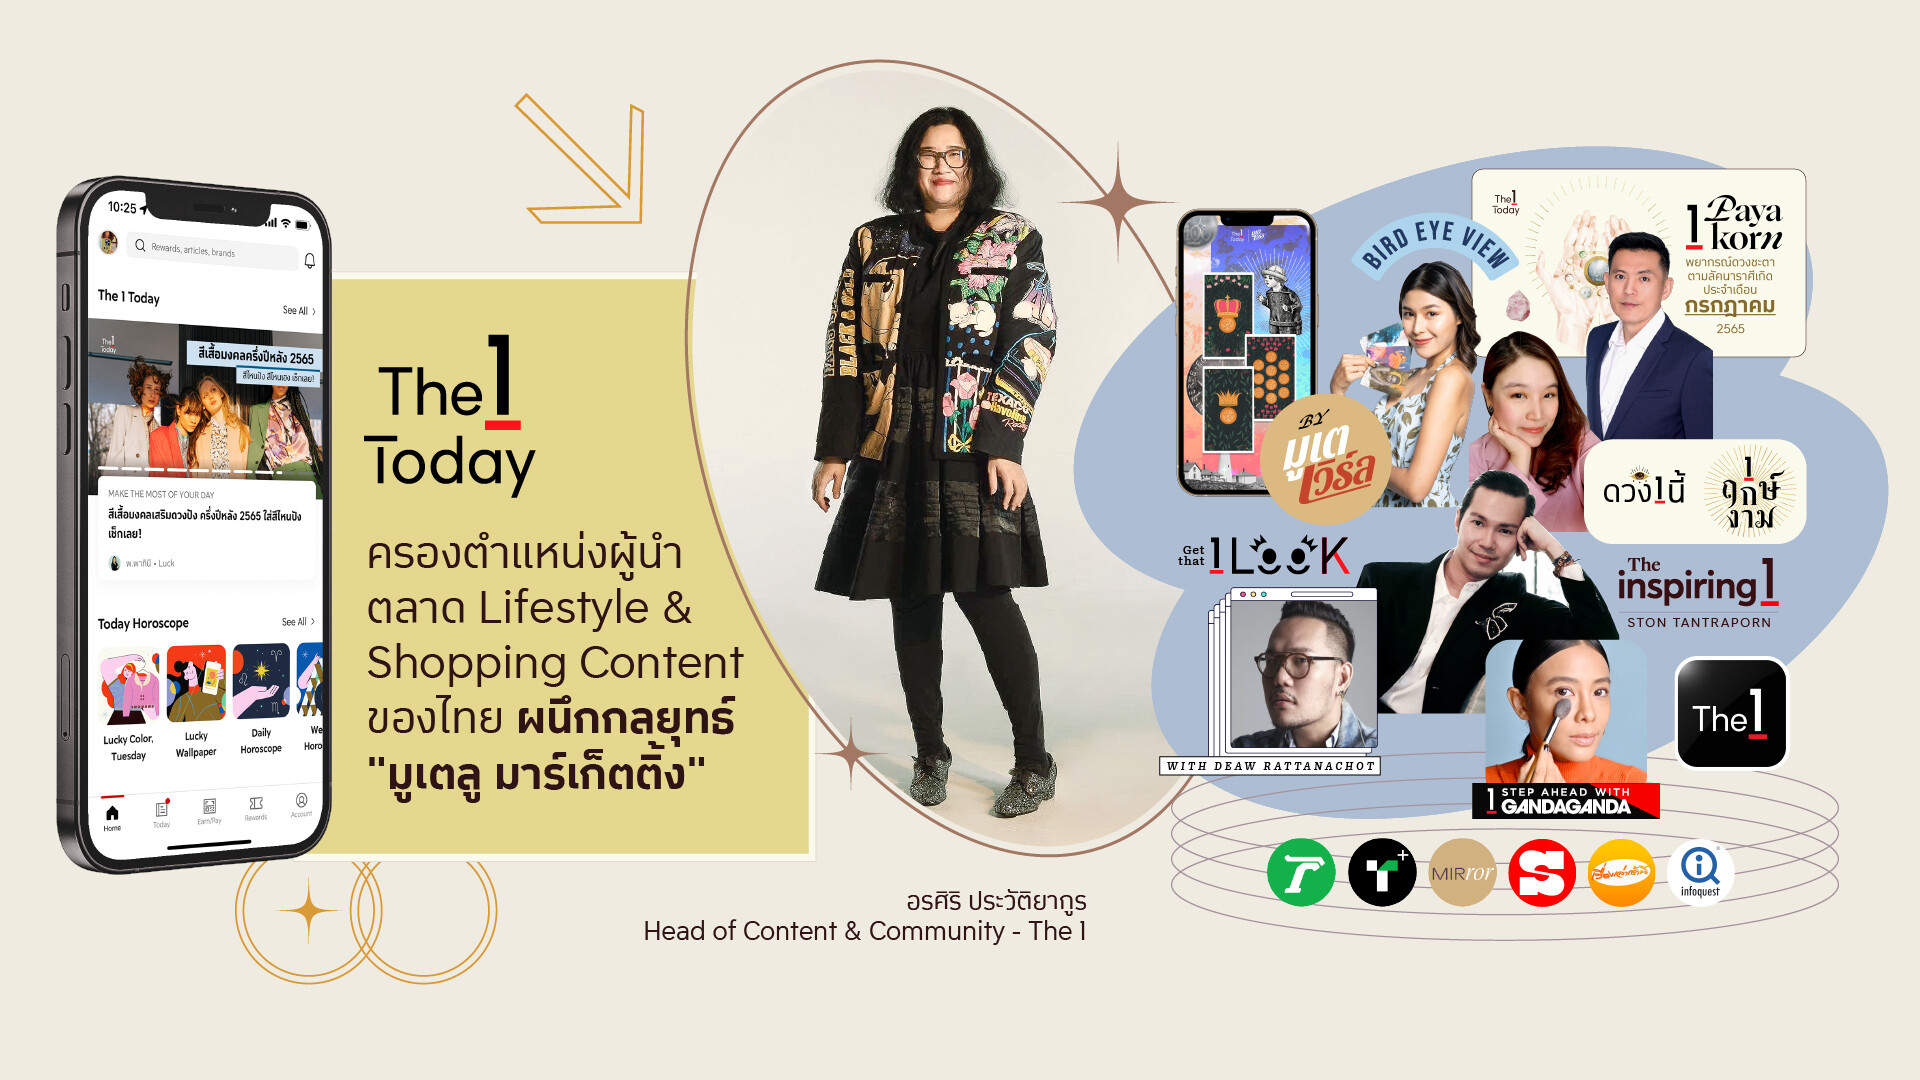 The 1 Today ครองตำแหน่งผู้นำตลาด Lifestyle & Shopping Content ของไทย ผนึกกลยุทธ์  "มูเตลู มาร์เก็ตติ้ง" เช็ก-แก้ดวงเพียงปลายนิ้วผ่าน The 1 App โดนใจคนรุ่นใหม่อย่างแท้จริง